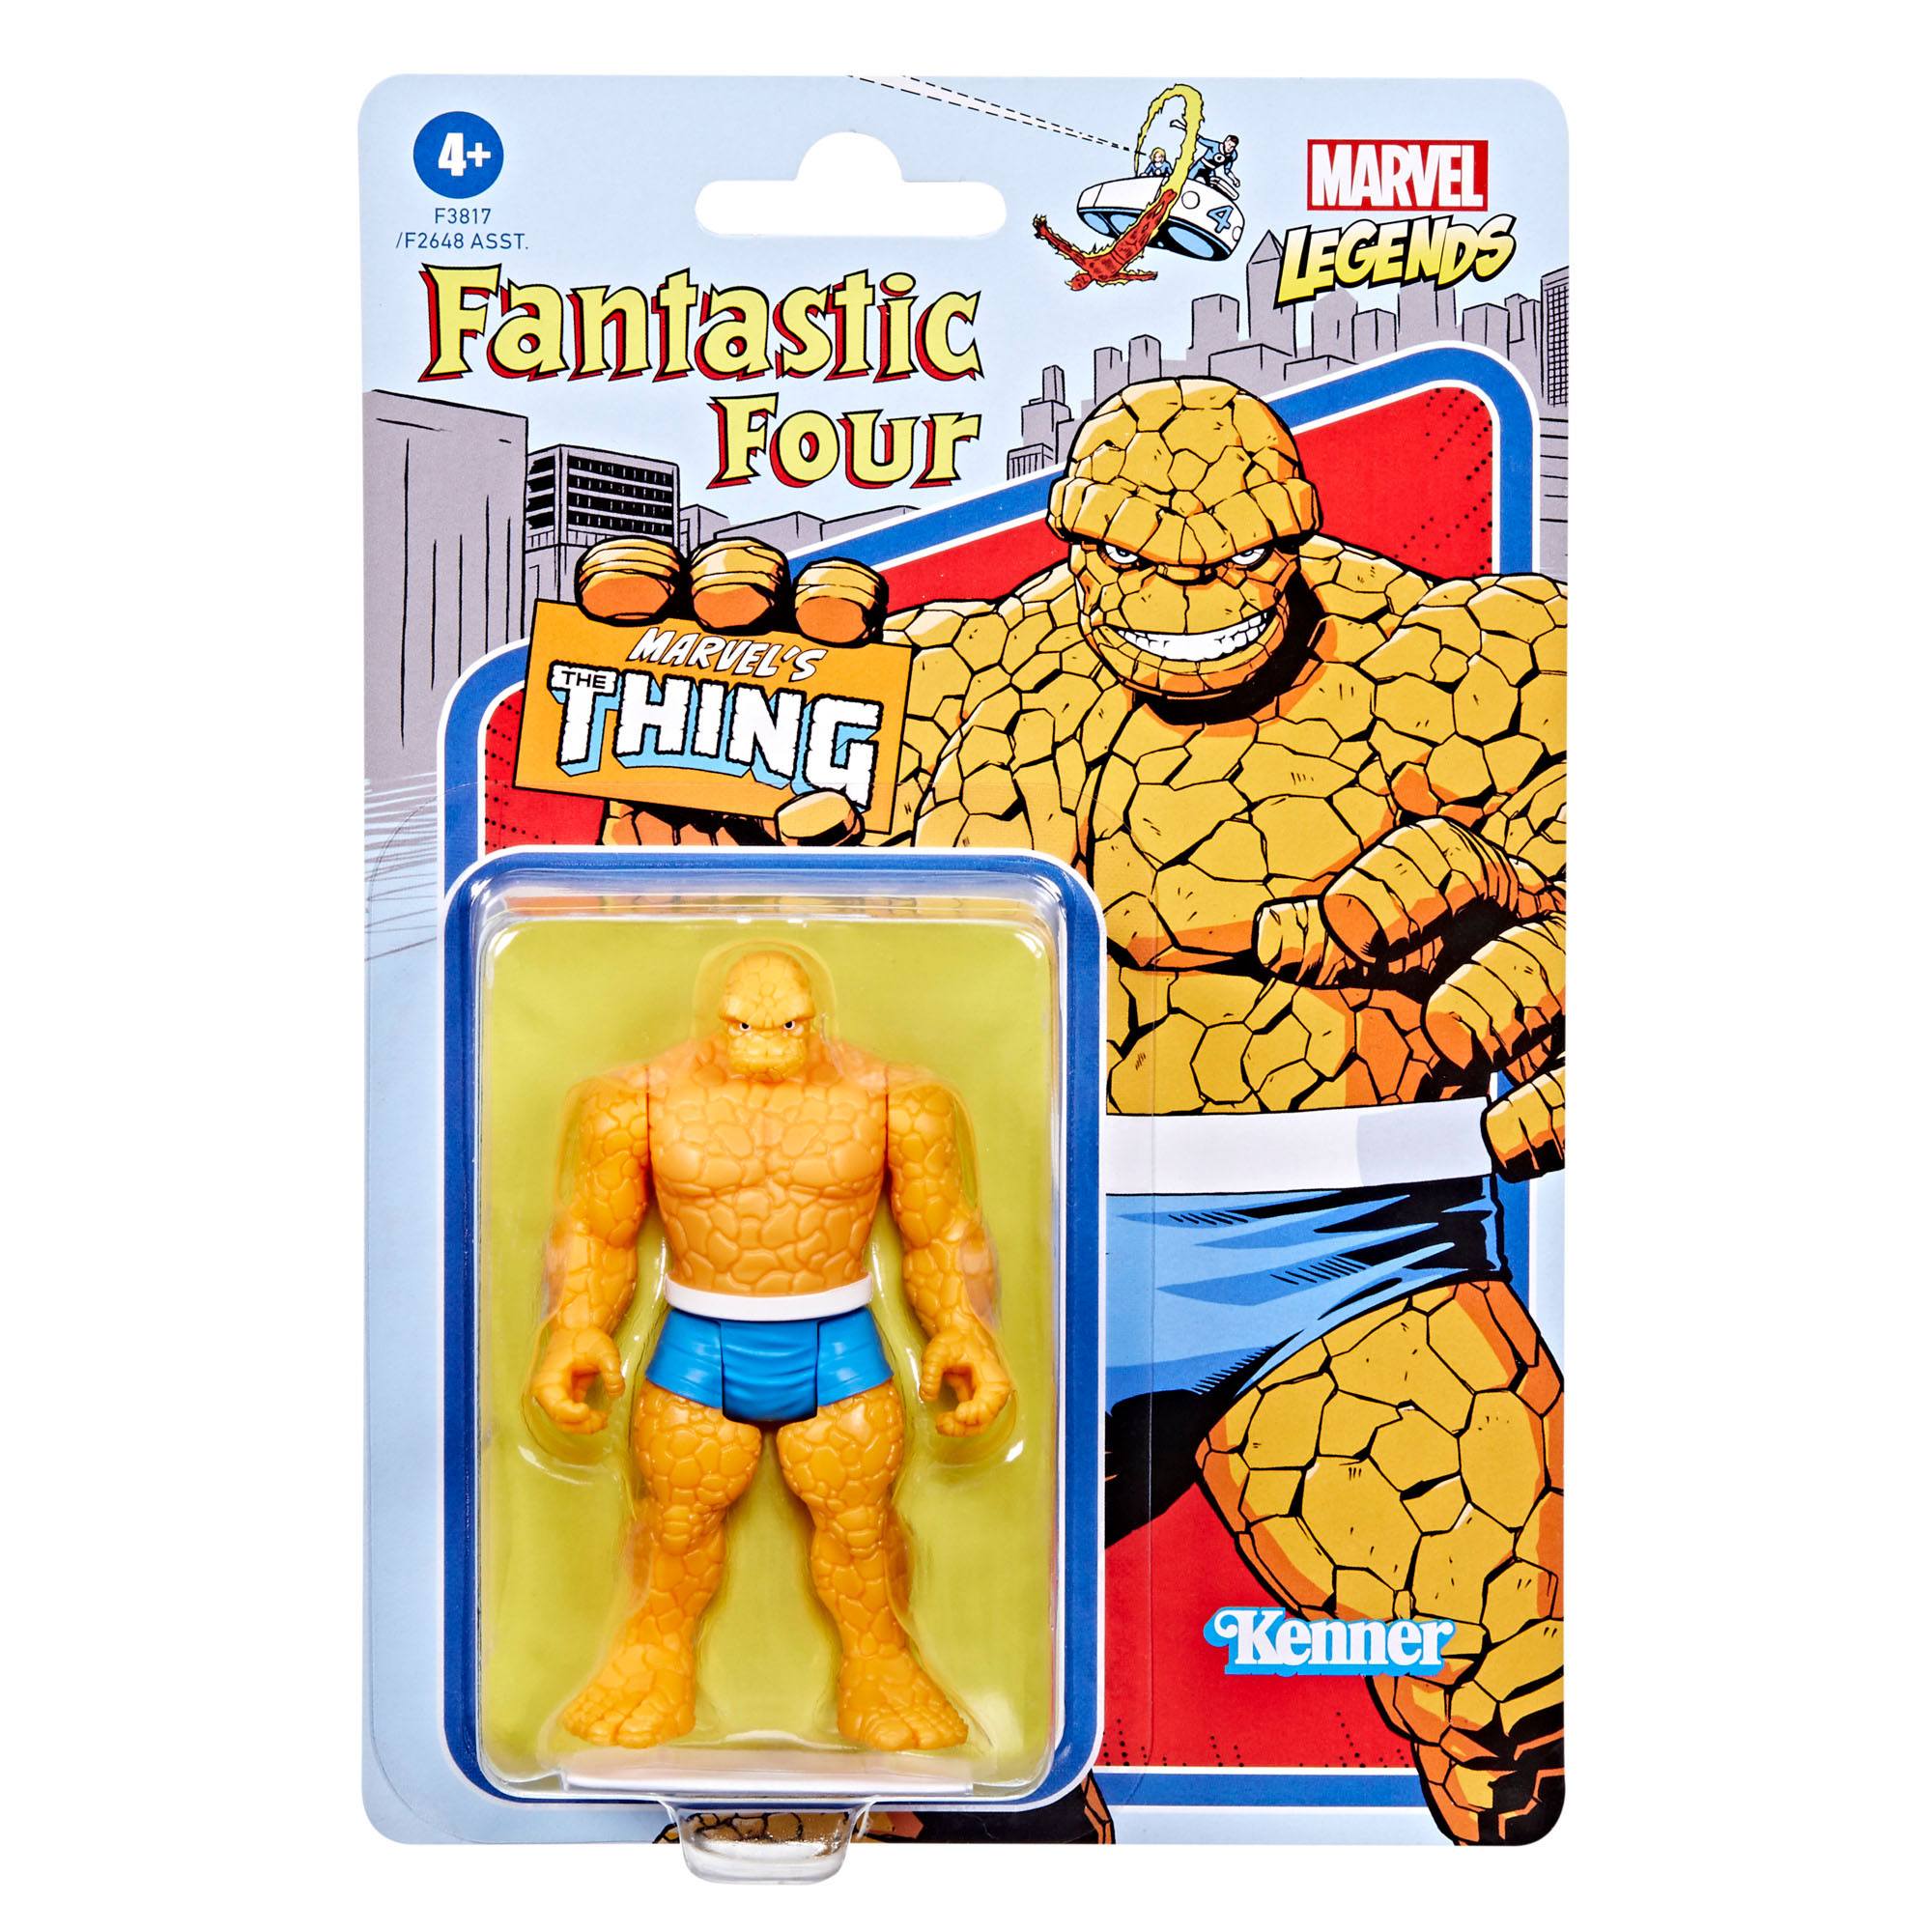 Fantastic Four Marvel Legends Retro Collection Actionfigur 2022 Marvel's The Thing 10 cm F38175L00 5010993954551